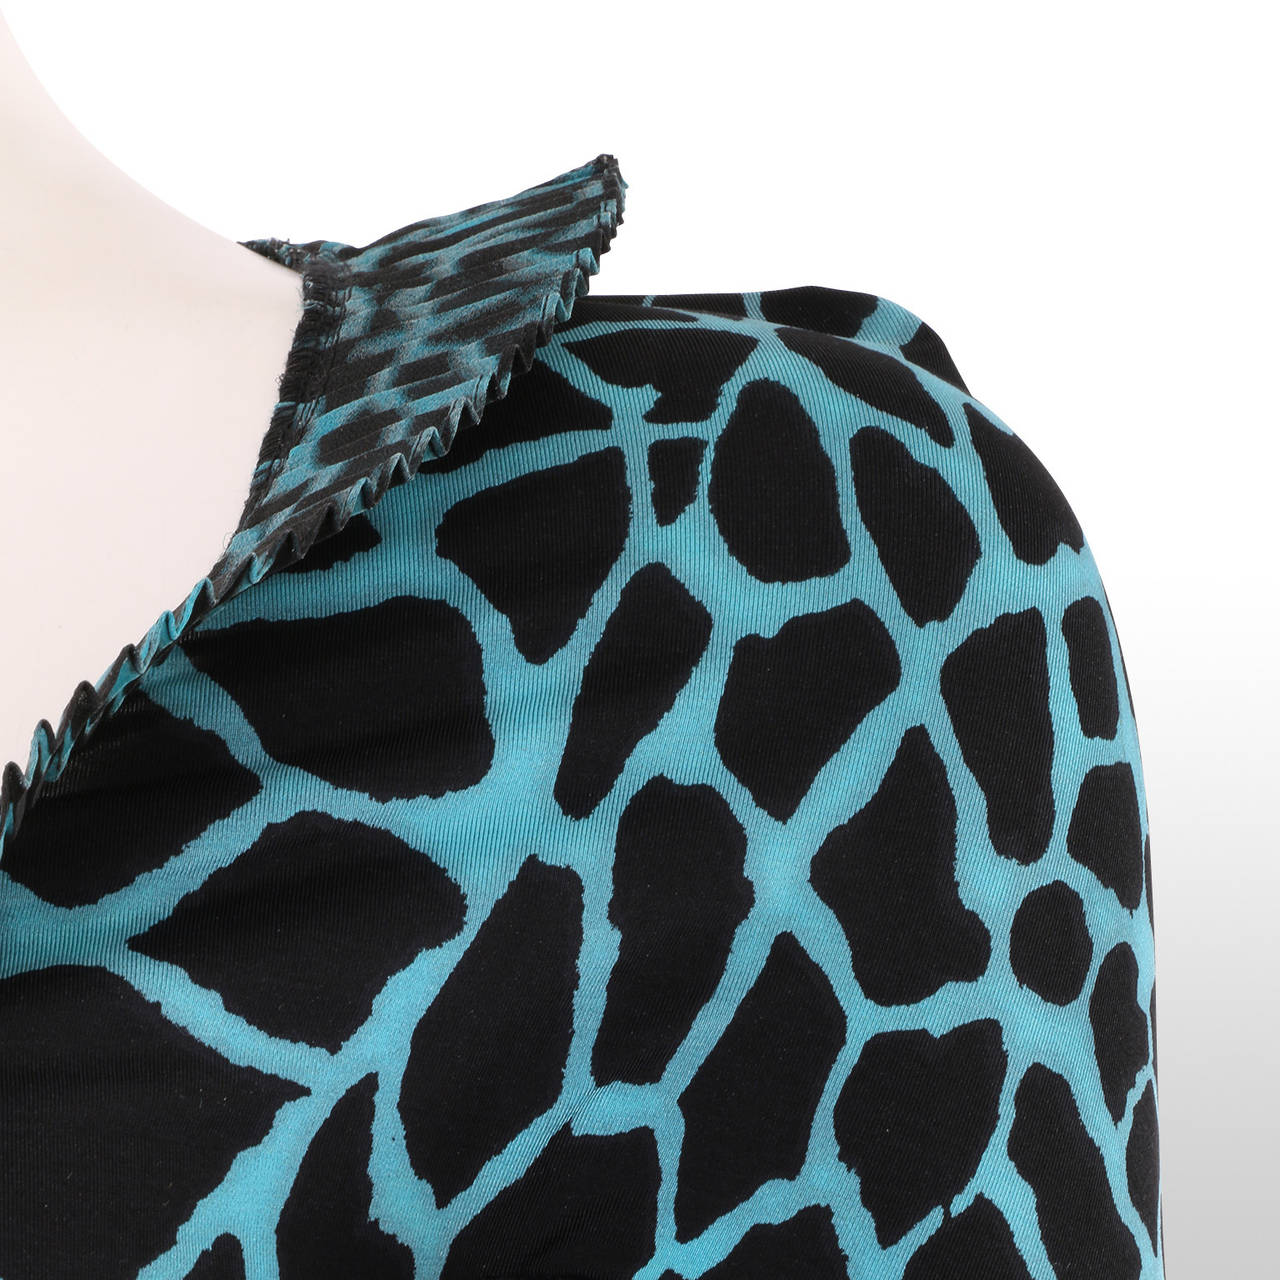 Roberto Cavalli Turquoise and Black Giraffe Print Jersey Dress For Sale 2